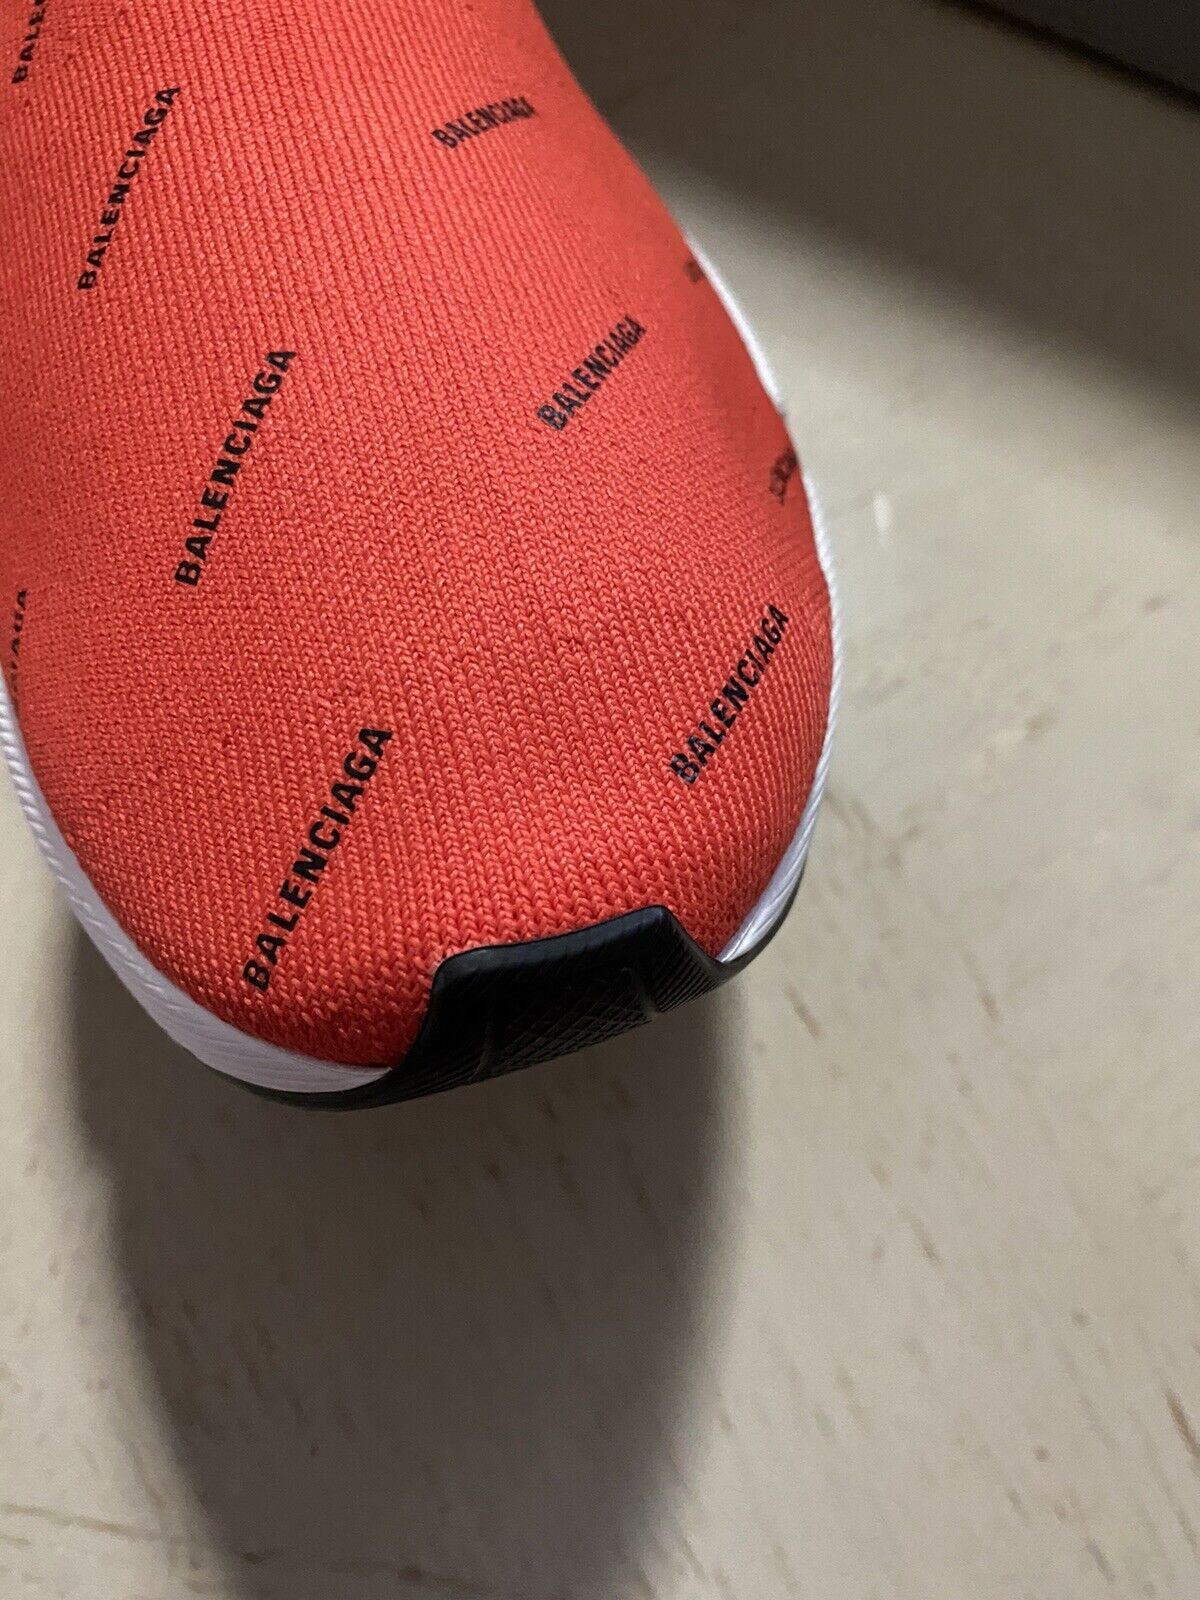 New $995 Balenciaga Men's Speed Lt. 20 Logo Knit Sock Trainer Sneakers Red 13 US